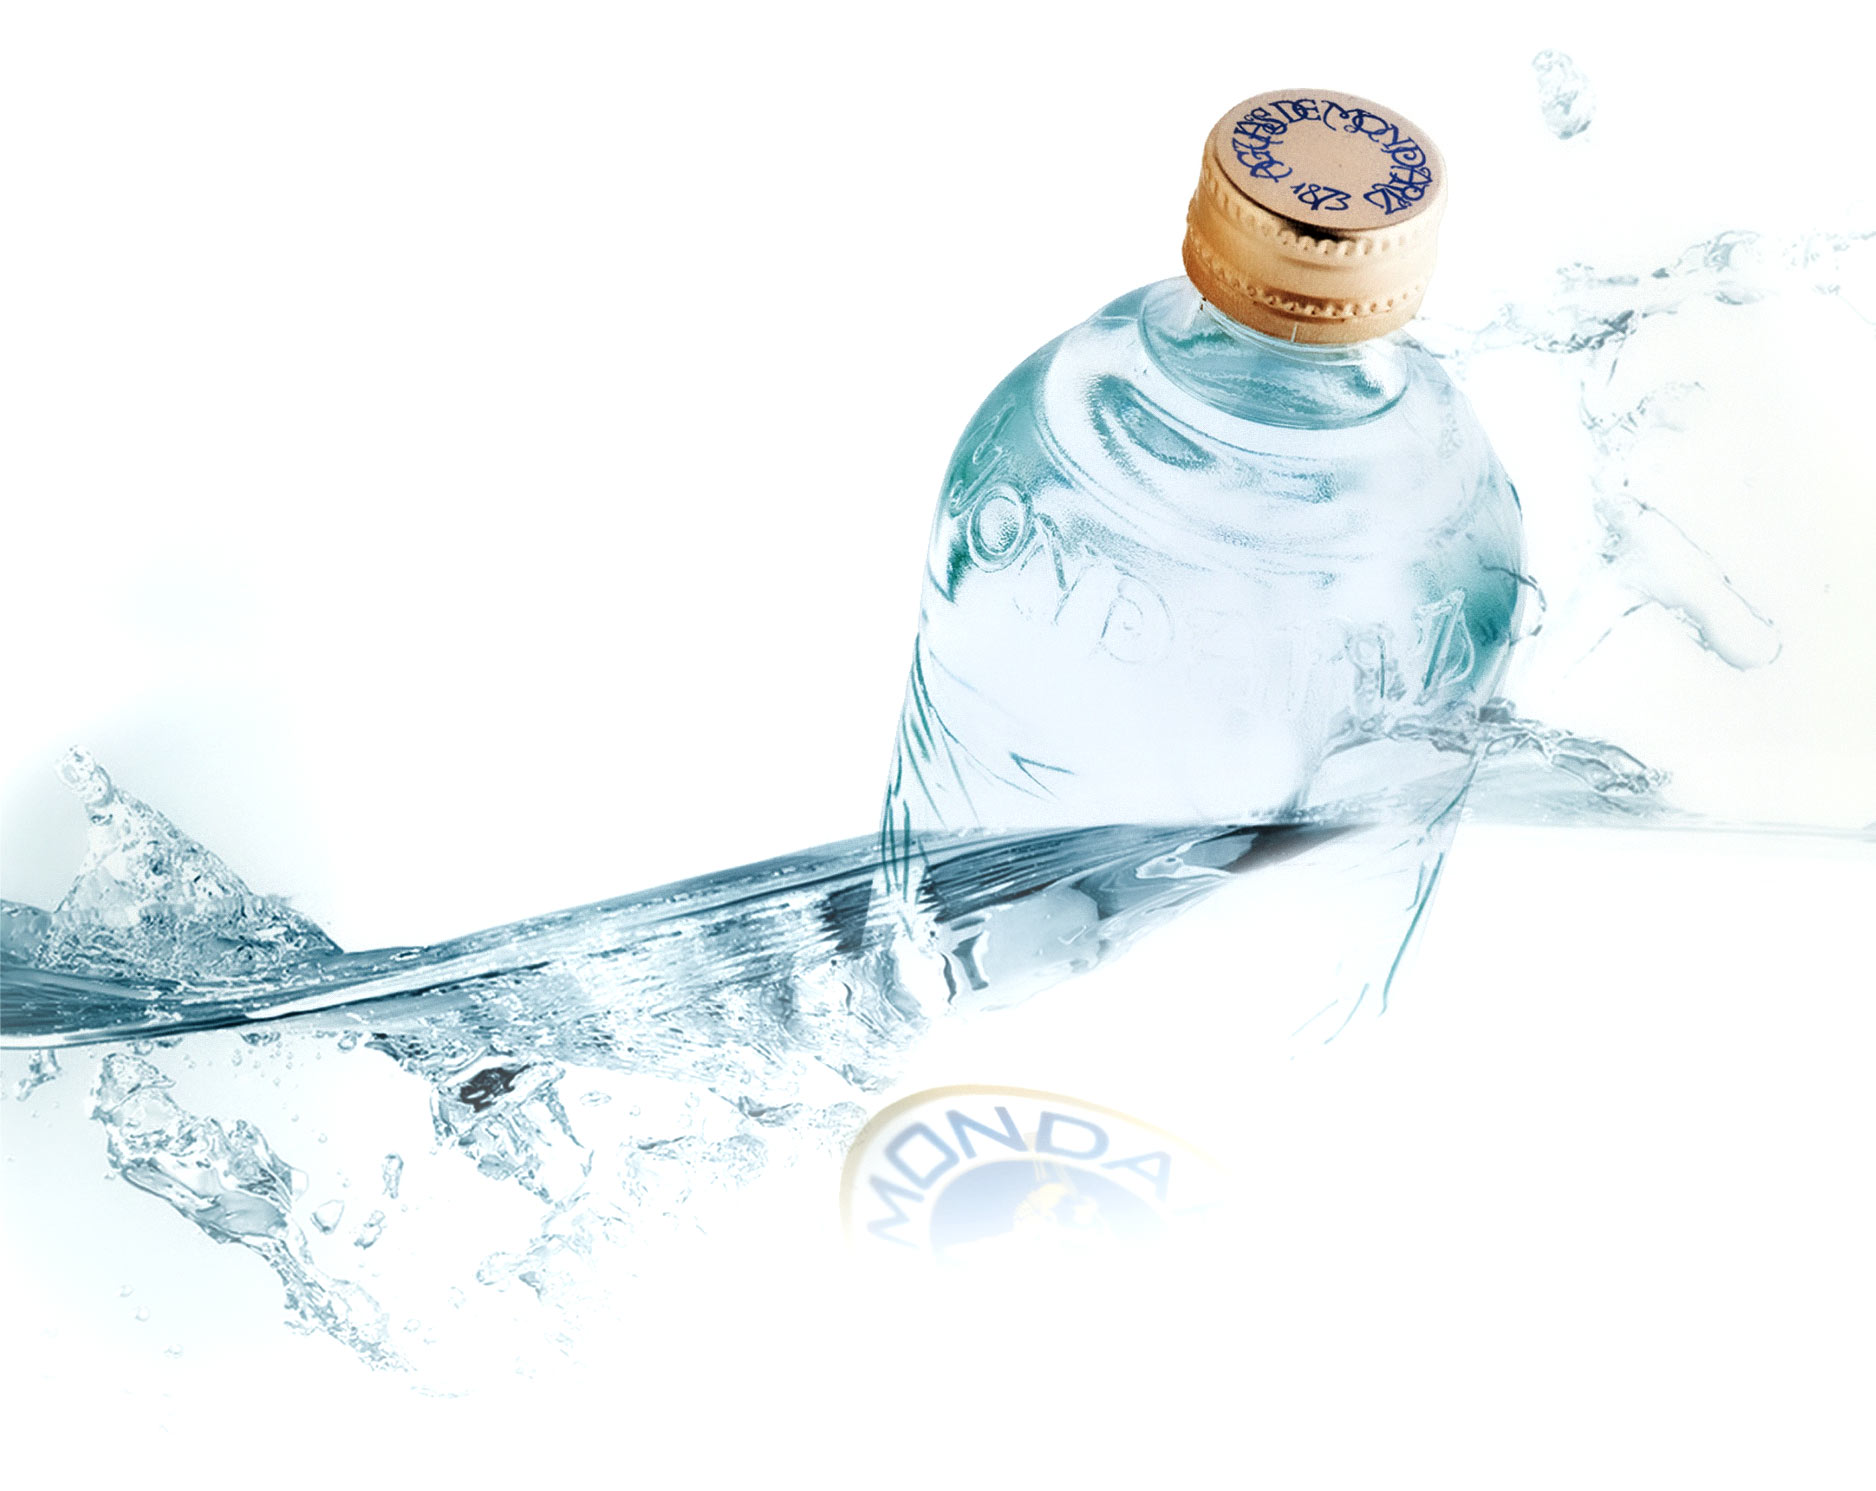 Agua Mondariz 5 litros de transparencia cristalina - TuCafeteria, garrafa  de agua 5 litros